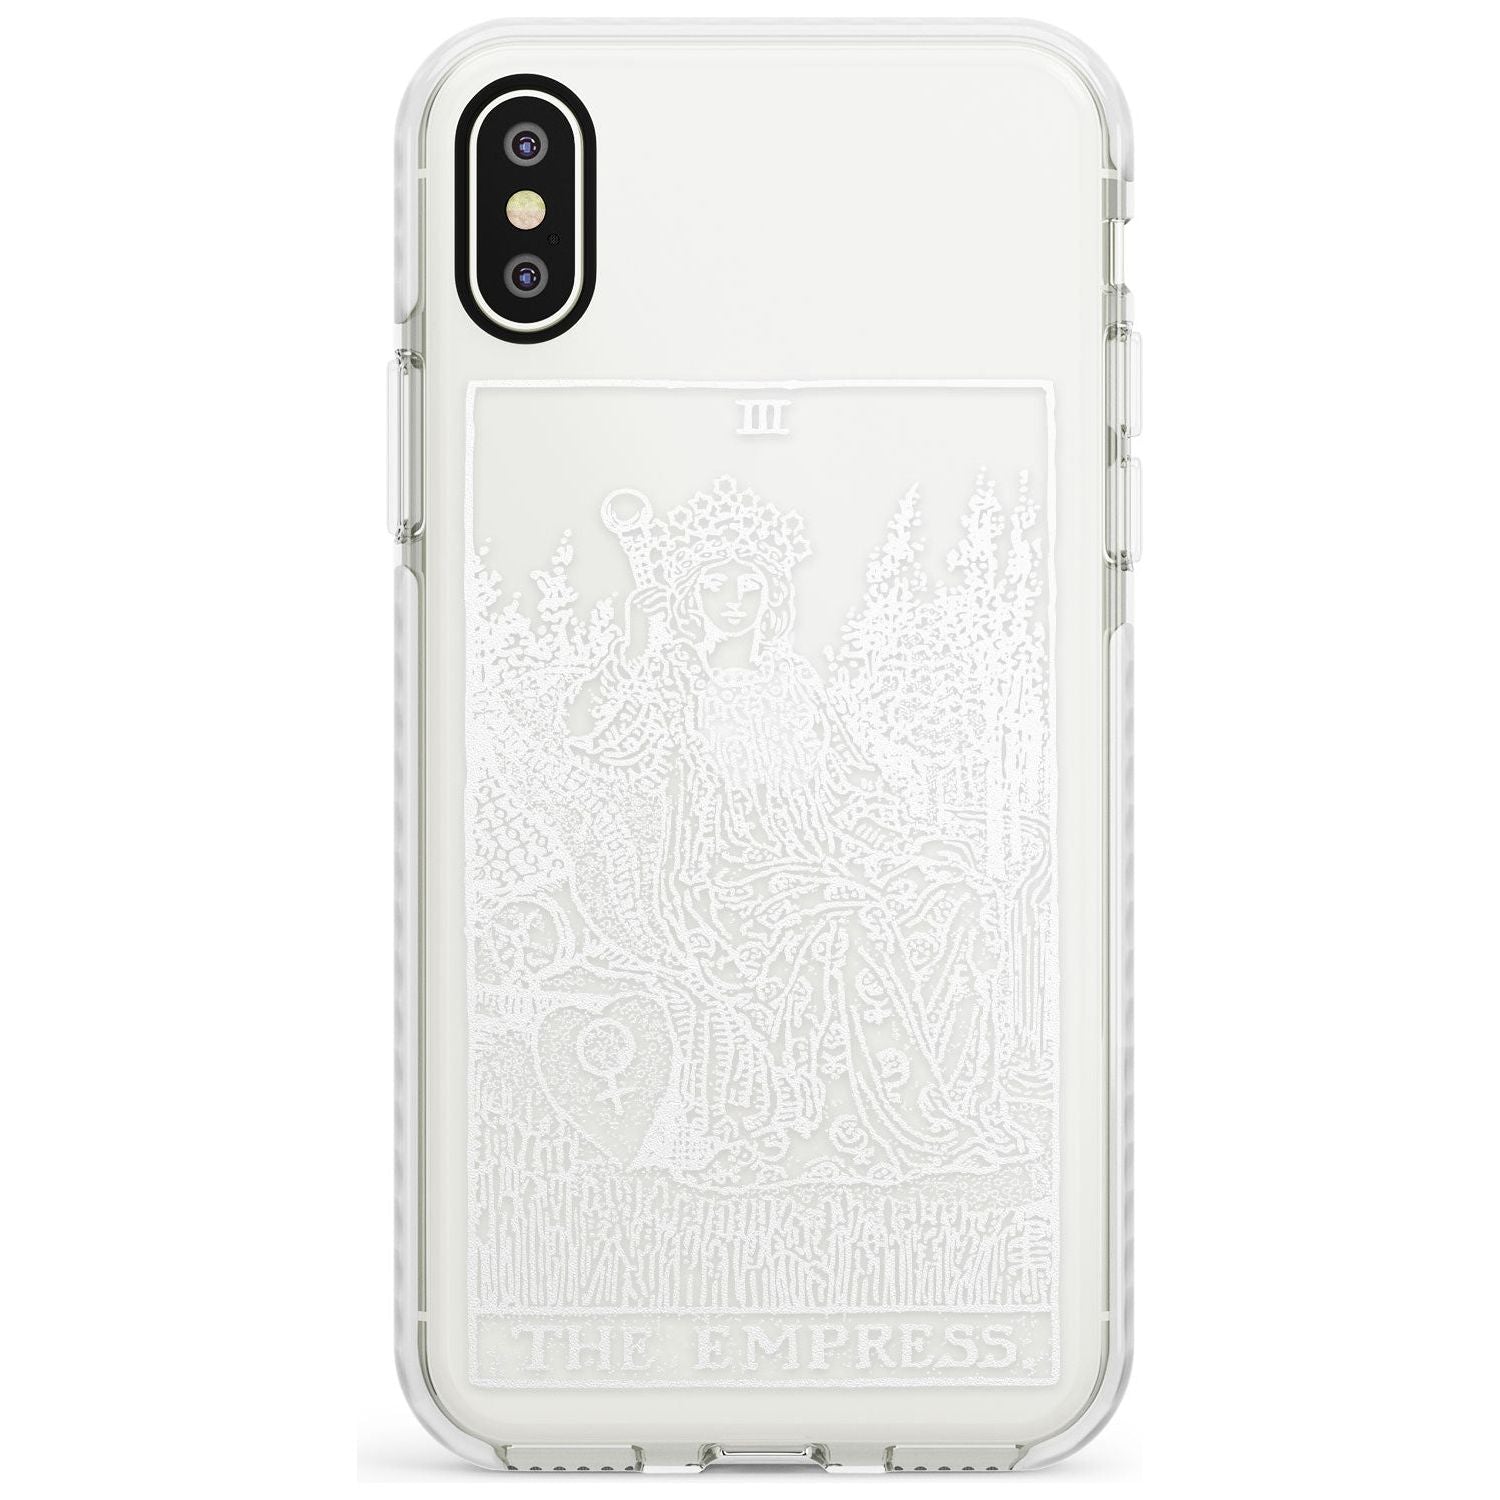 The Empress Tarot Card - White Transparent Slim TPU Phone Case Warehouse X XS Max XR